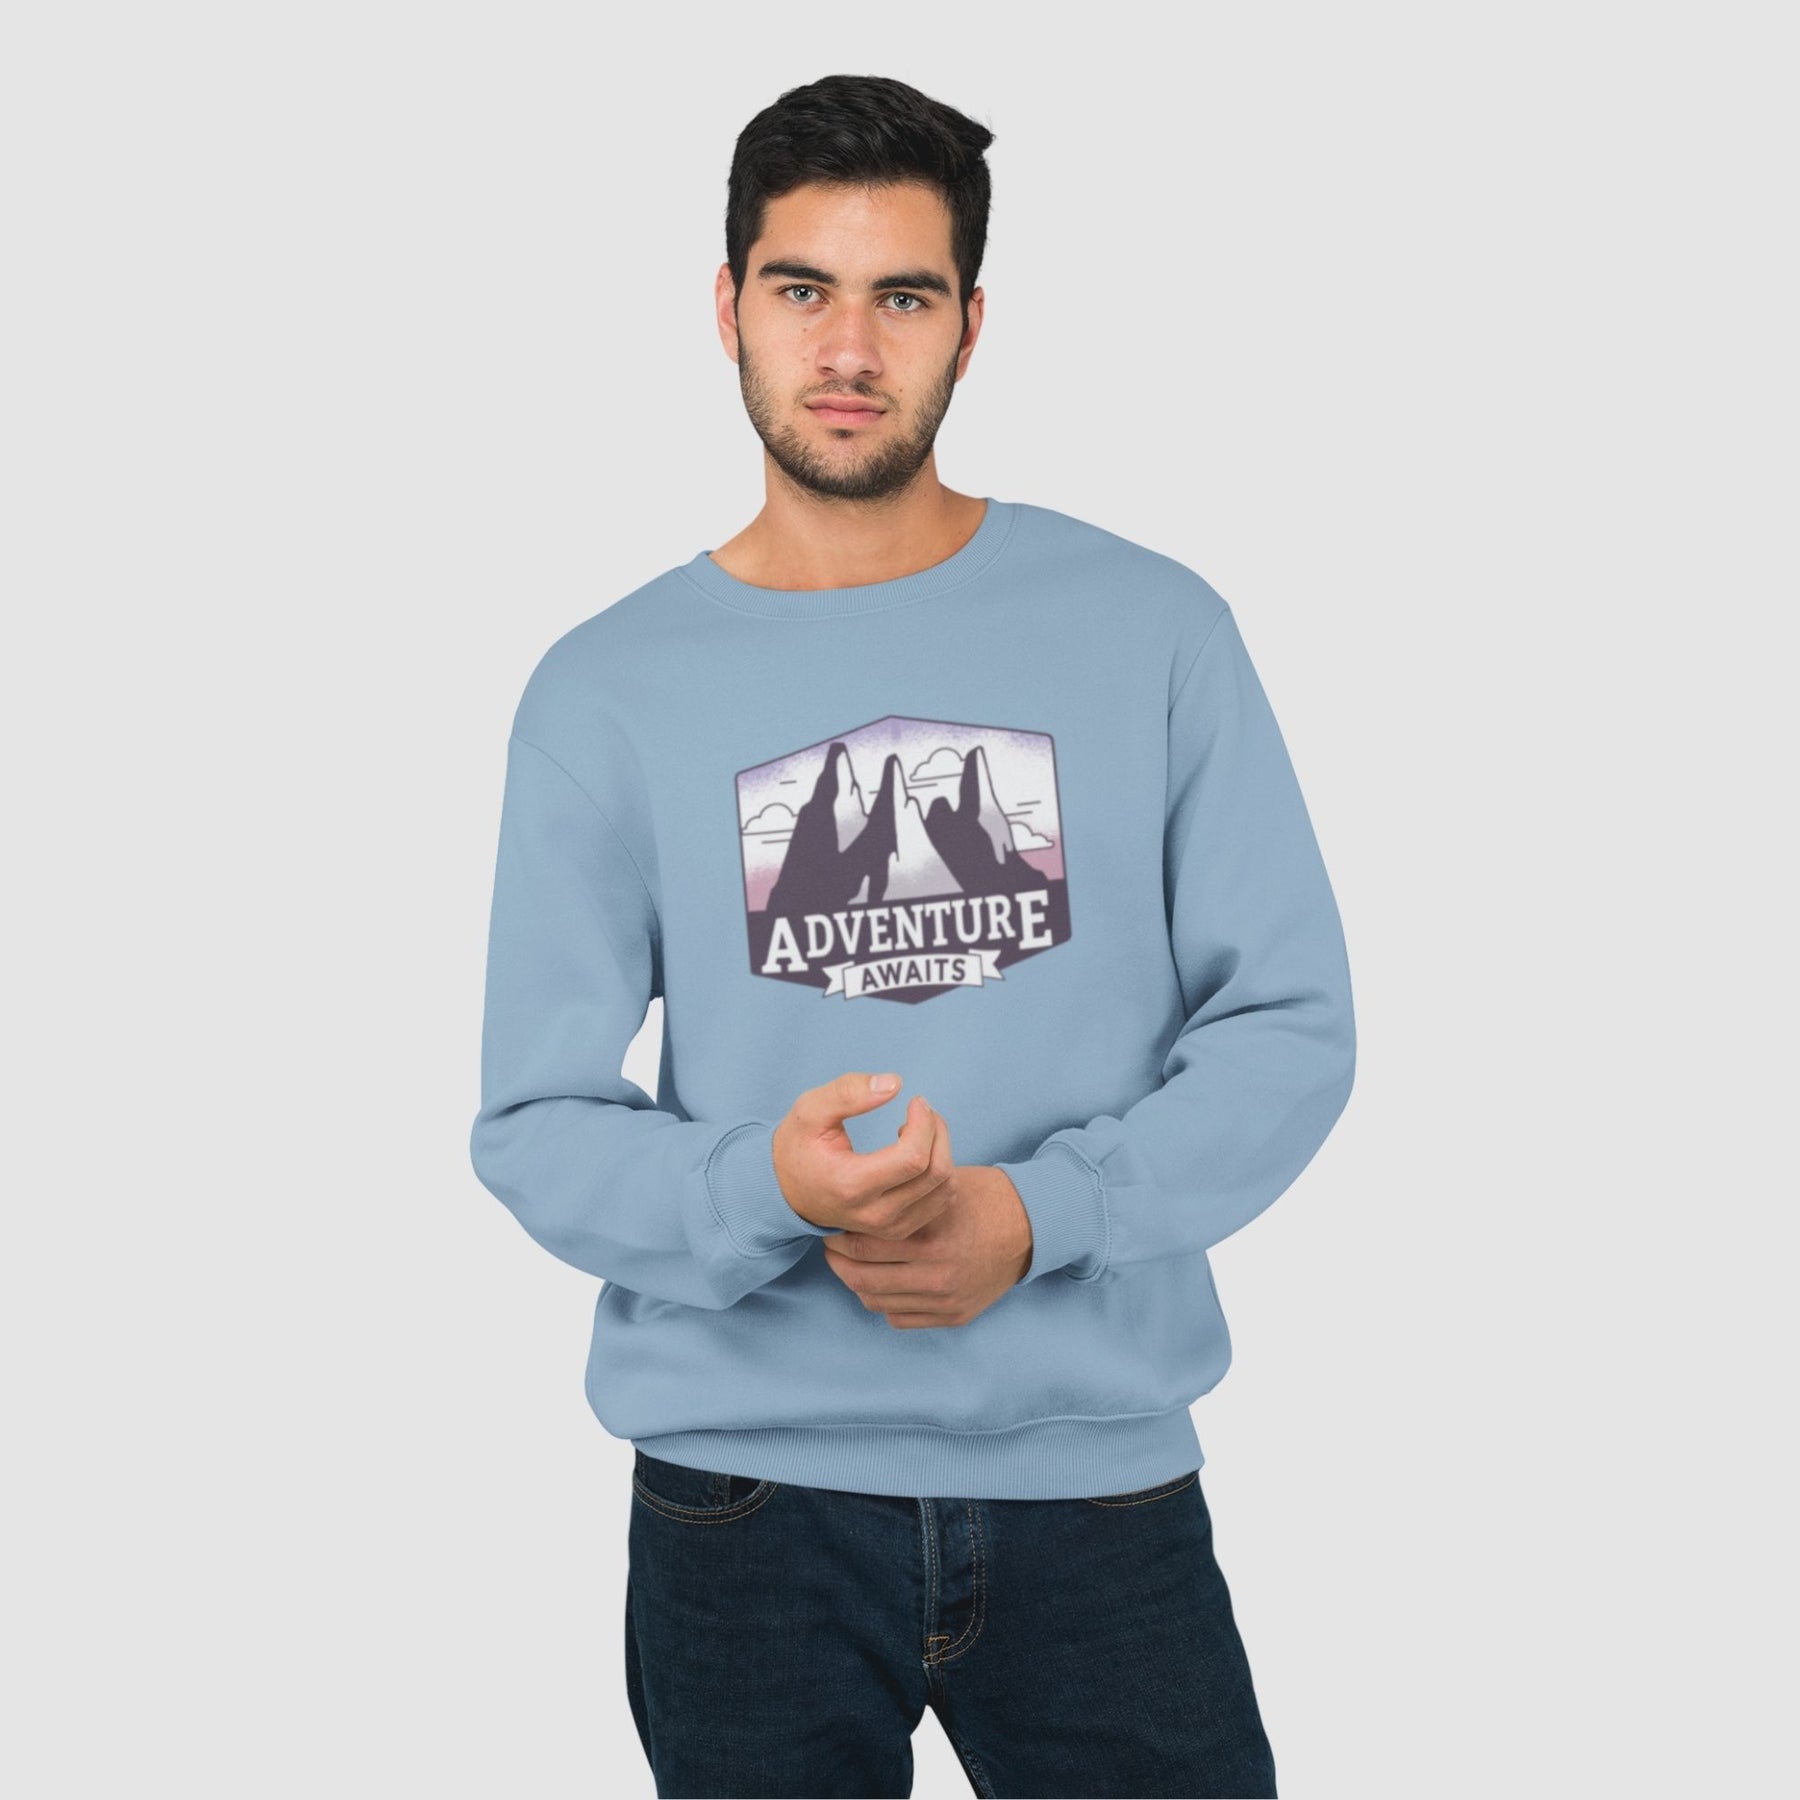 adventure-awaits-cotton-printed-unisex-light-blue-men-model-sweatshirt-gogirgit-com